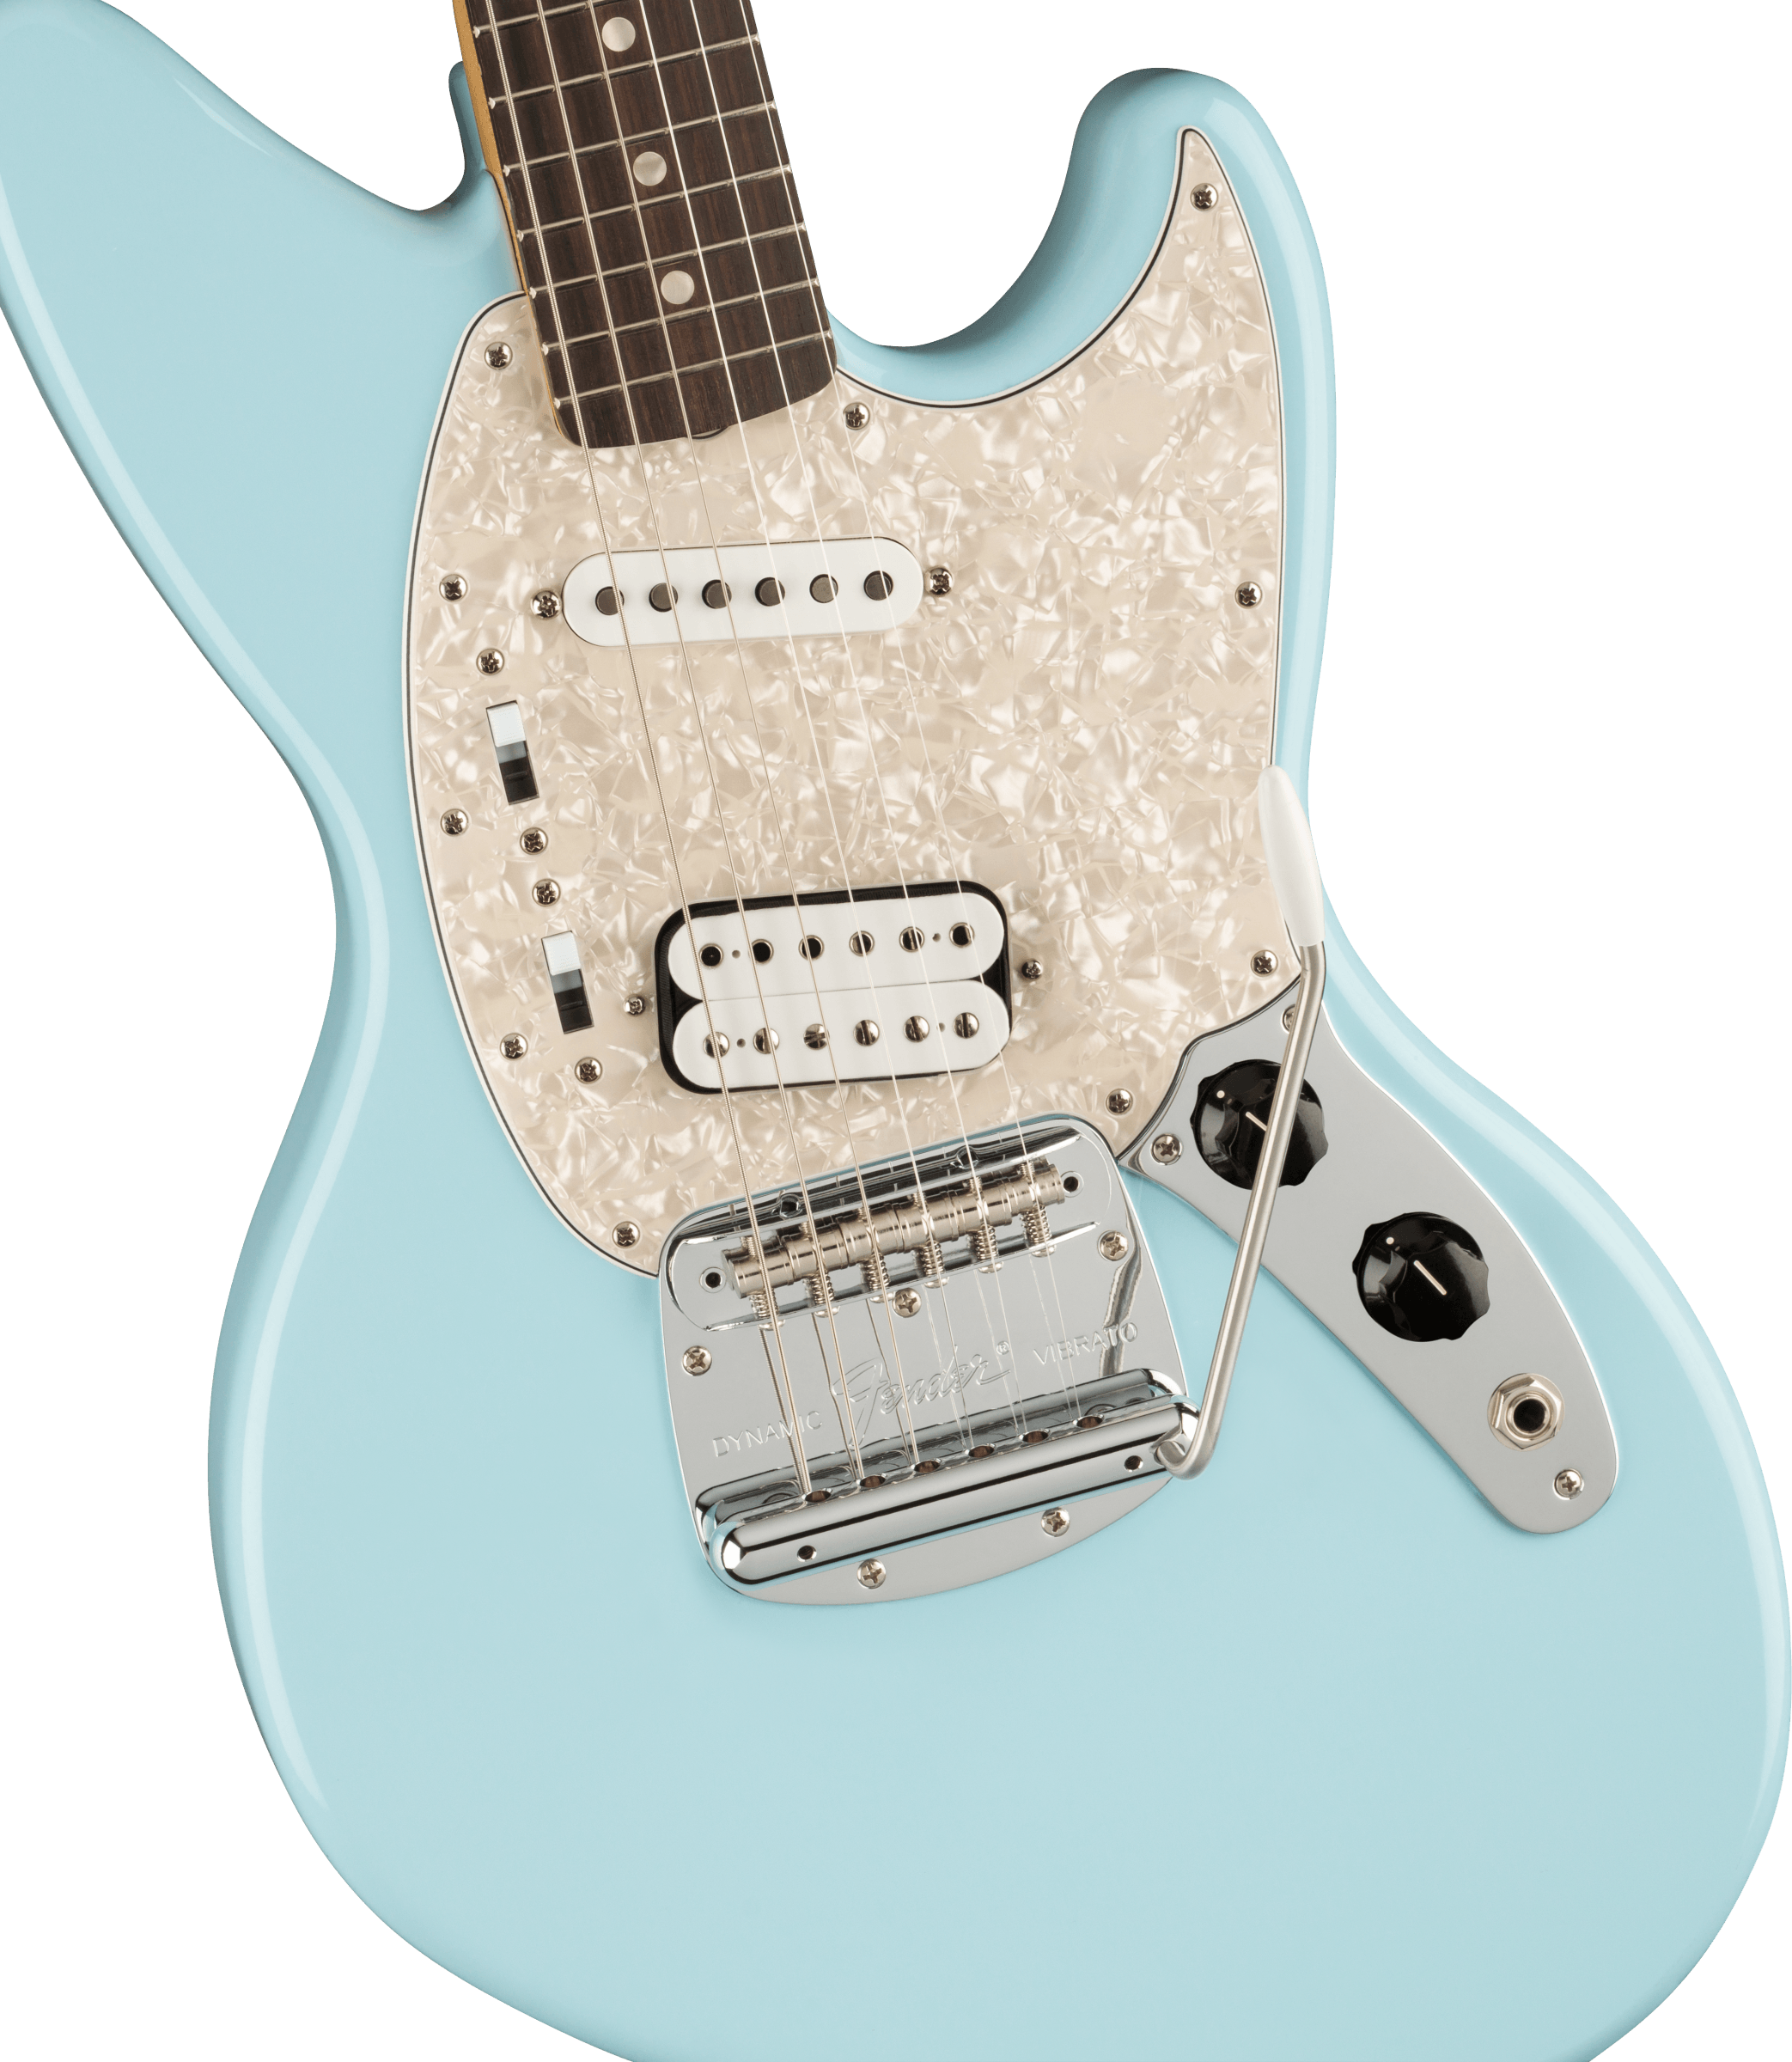 Fender Jag-stang Kurt Cobain Artist Hs Trem Rw - Sonic Blue - Guitarra electrica retro rock - Variation 2